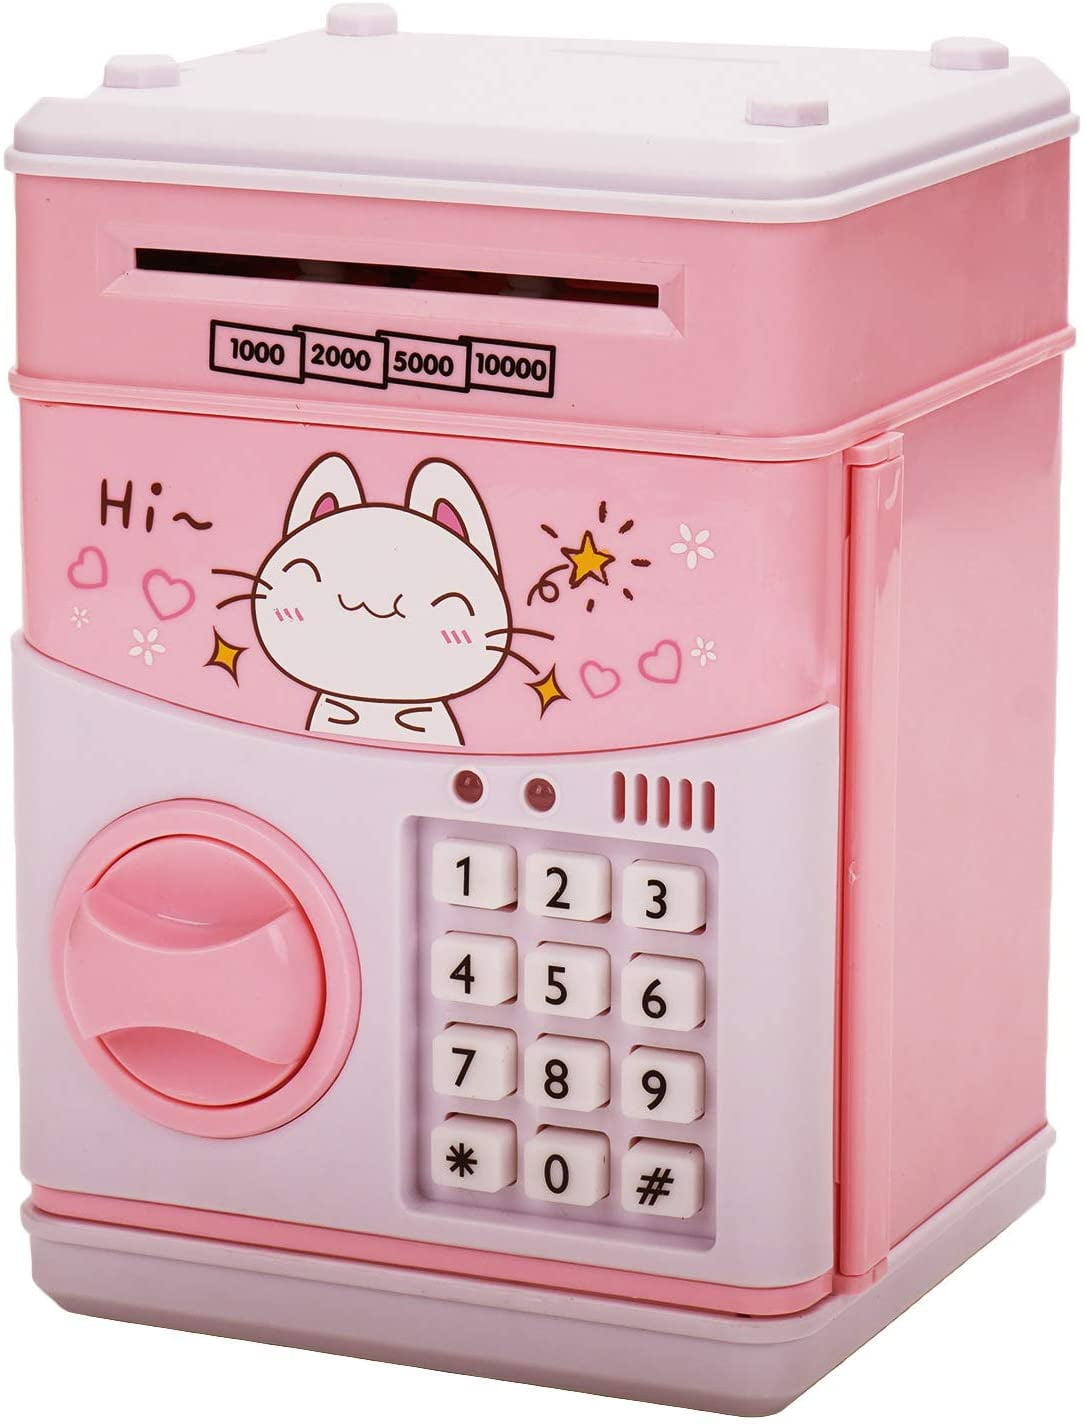 Password Piggy Bank Safe Box Bank ATM Machine Money Coin Savings Bank for Kids 